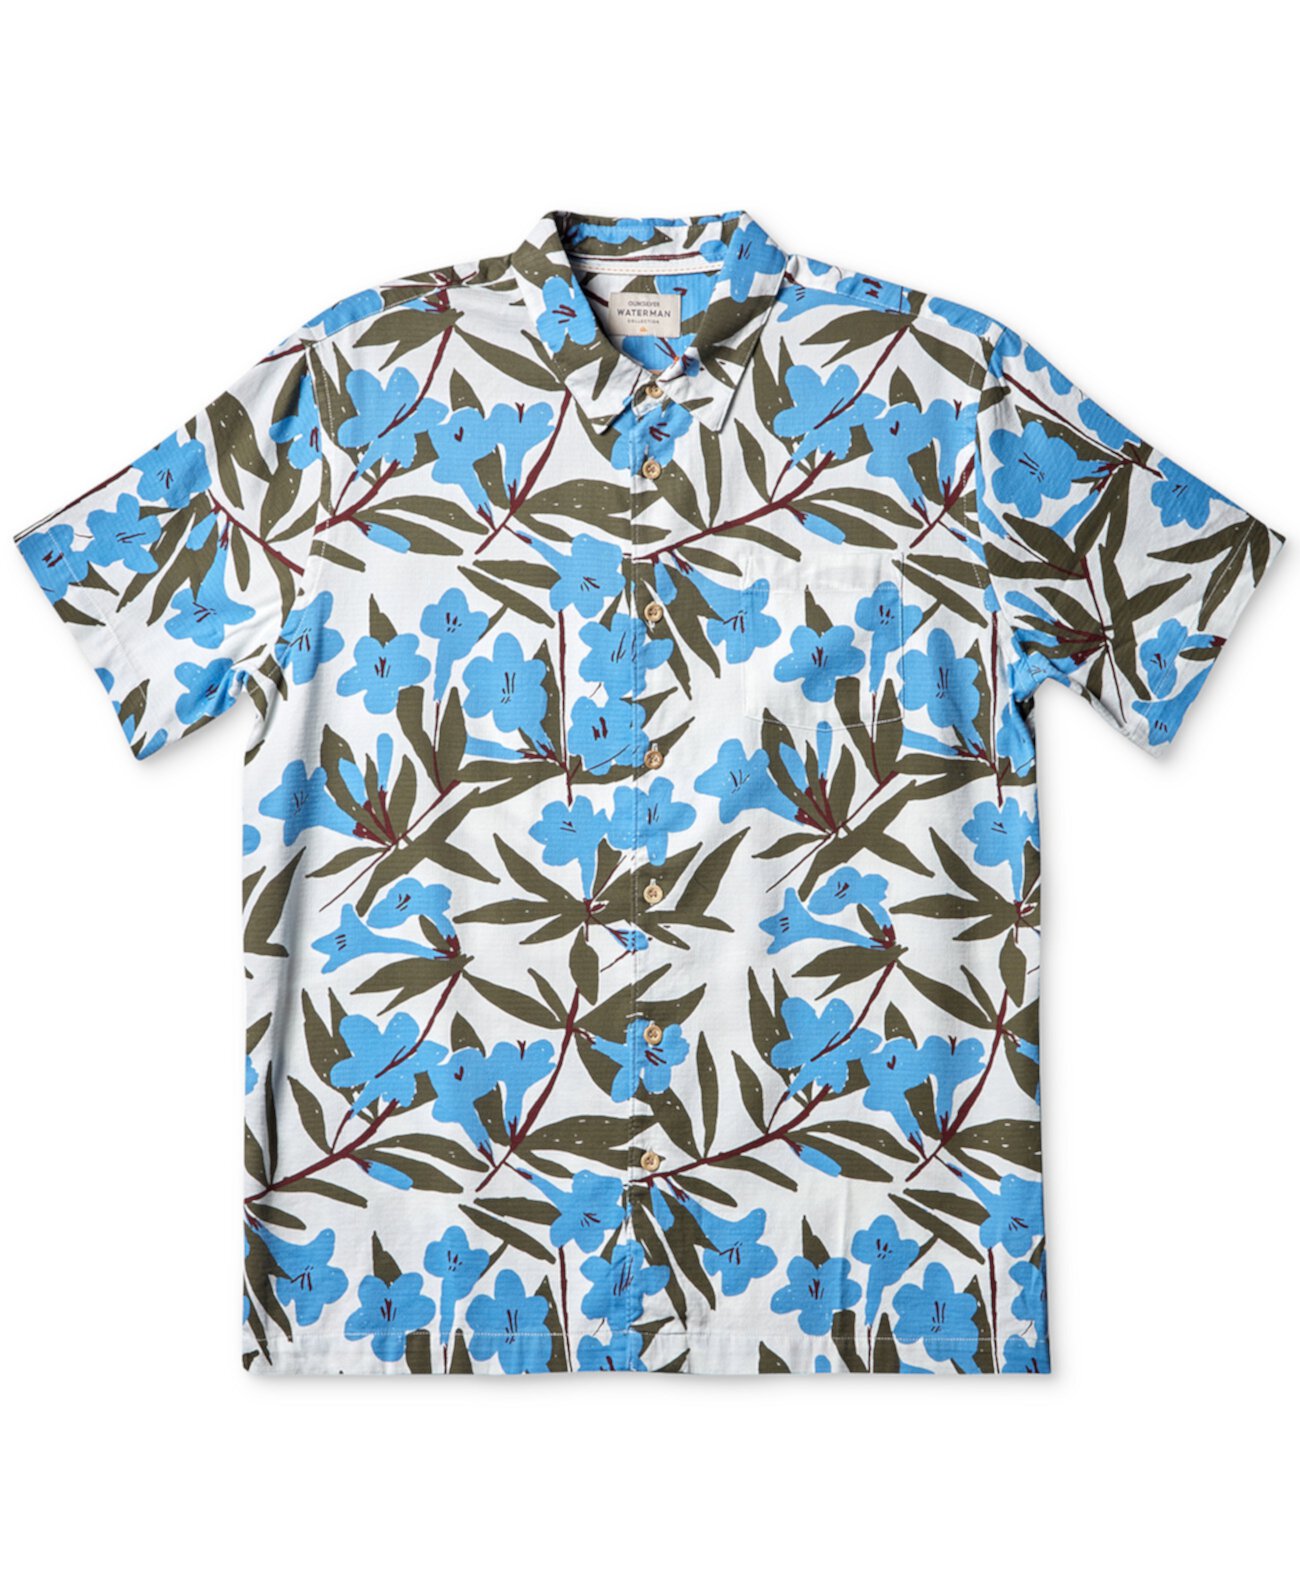 Мужская рубашка с тропическим принтом Quiksilver Quiksilver Waterman